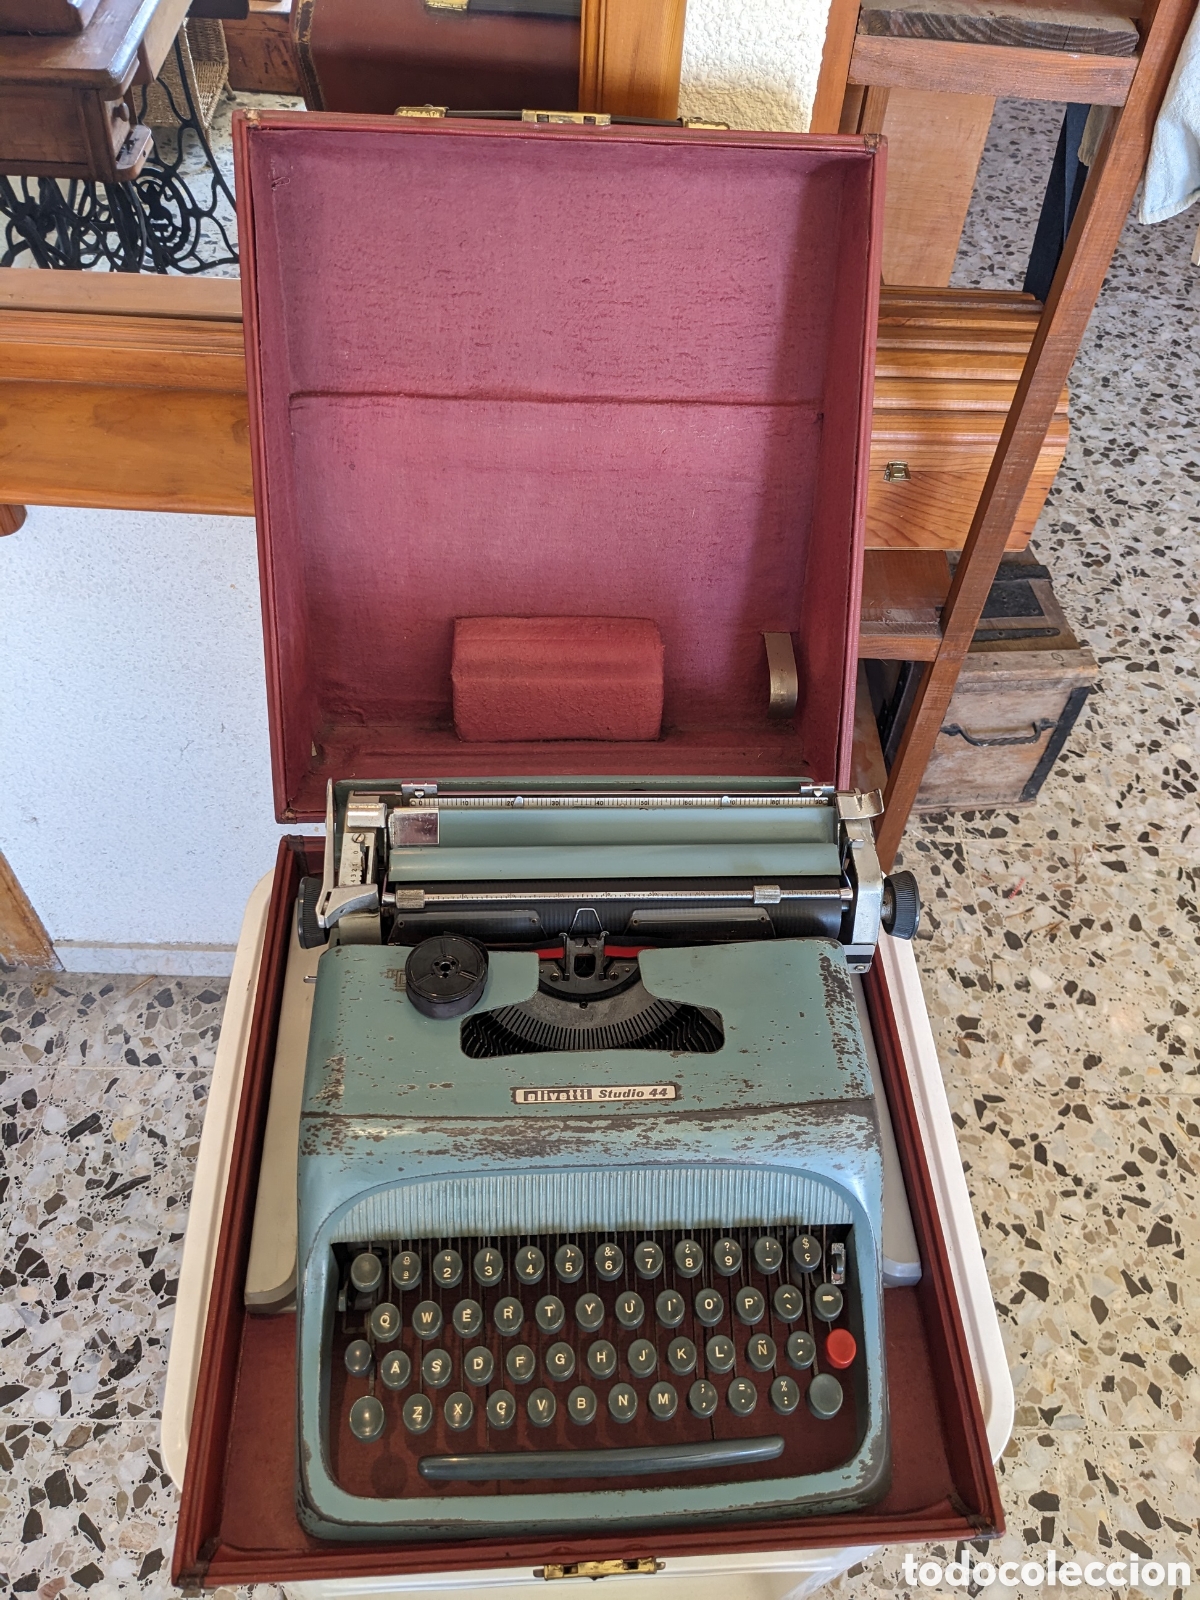 Máquina de escribir Olivetti studio 44